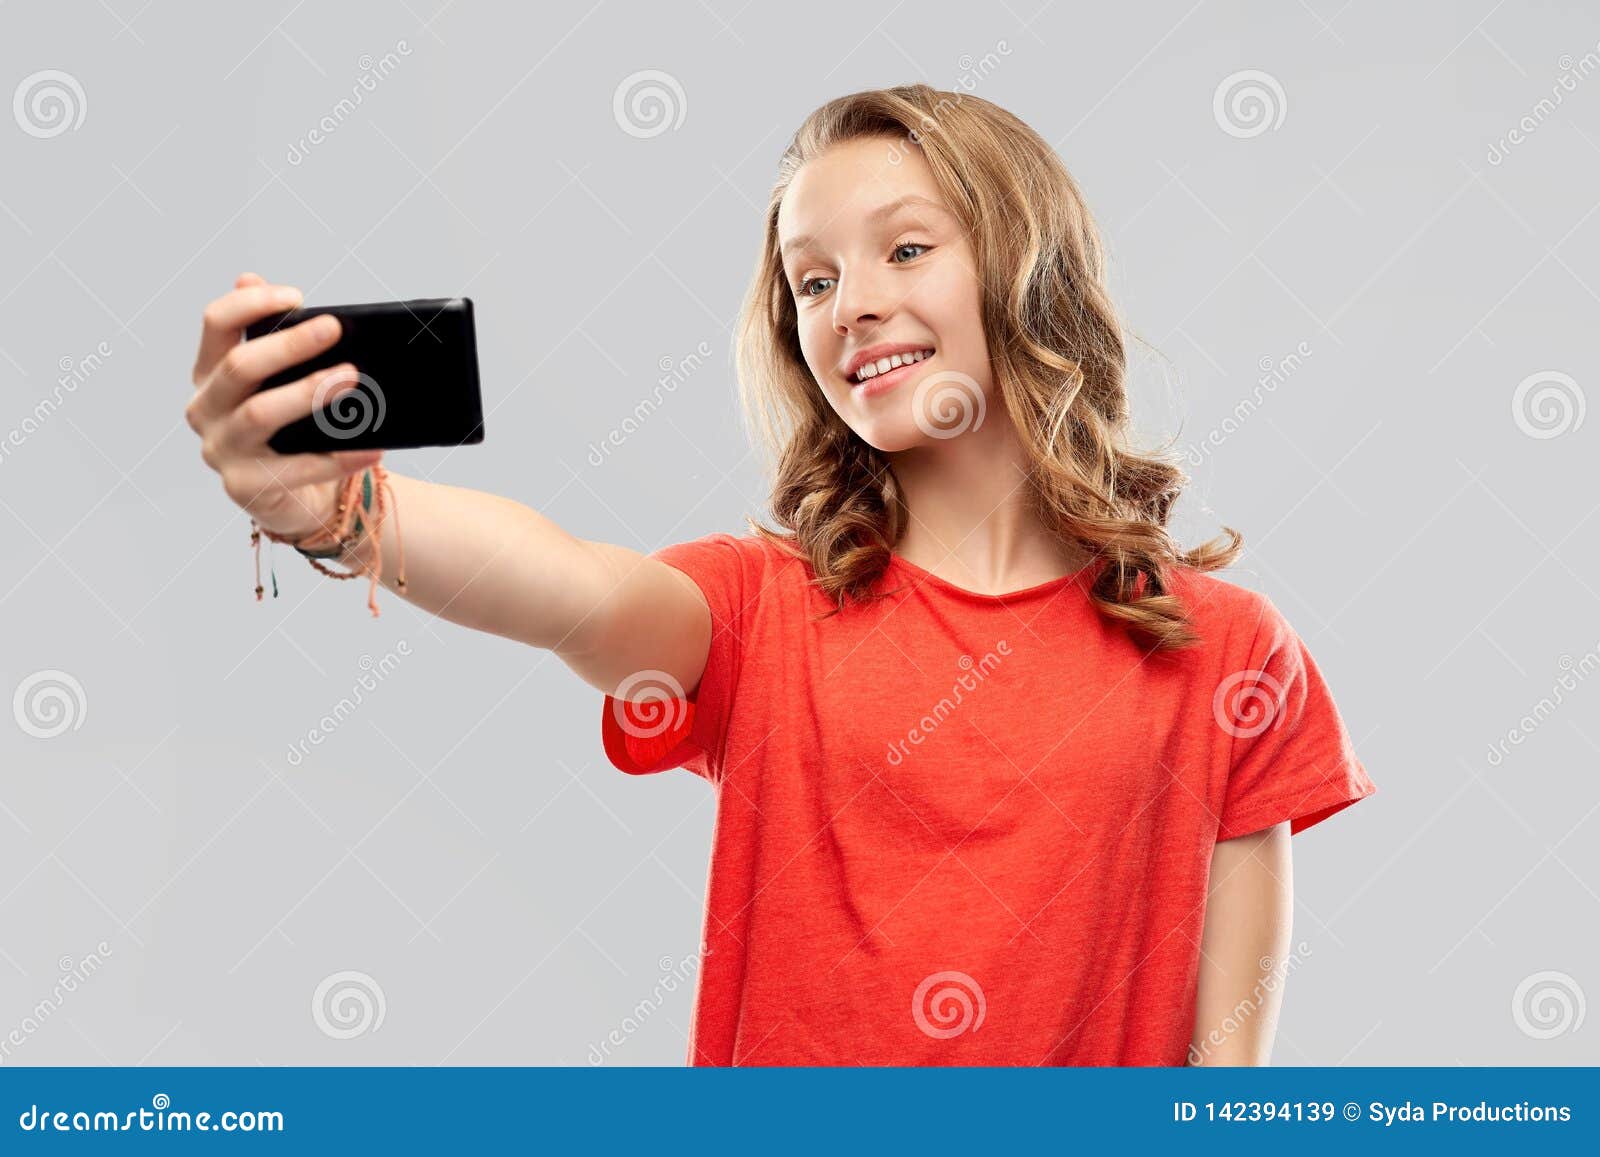 Smiling Teenage Girl Taking Selfie by Smartphone Stock Image - Image of ...